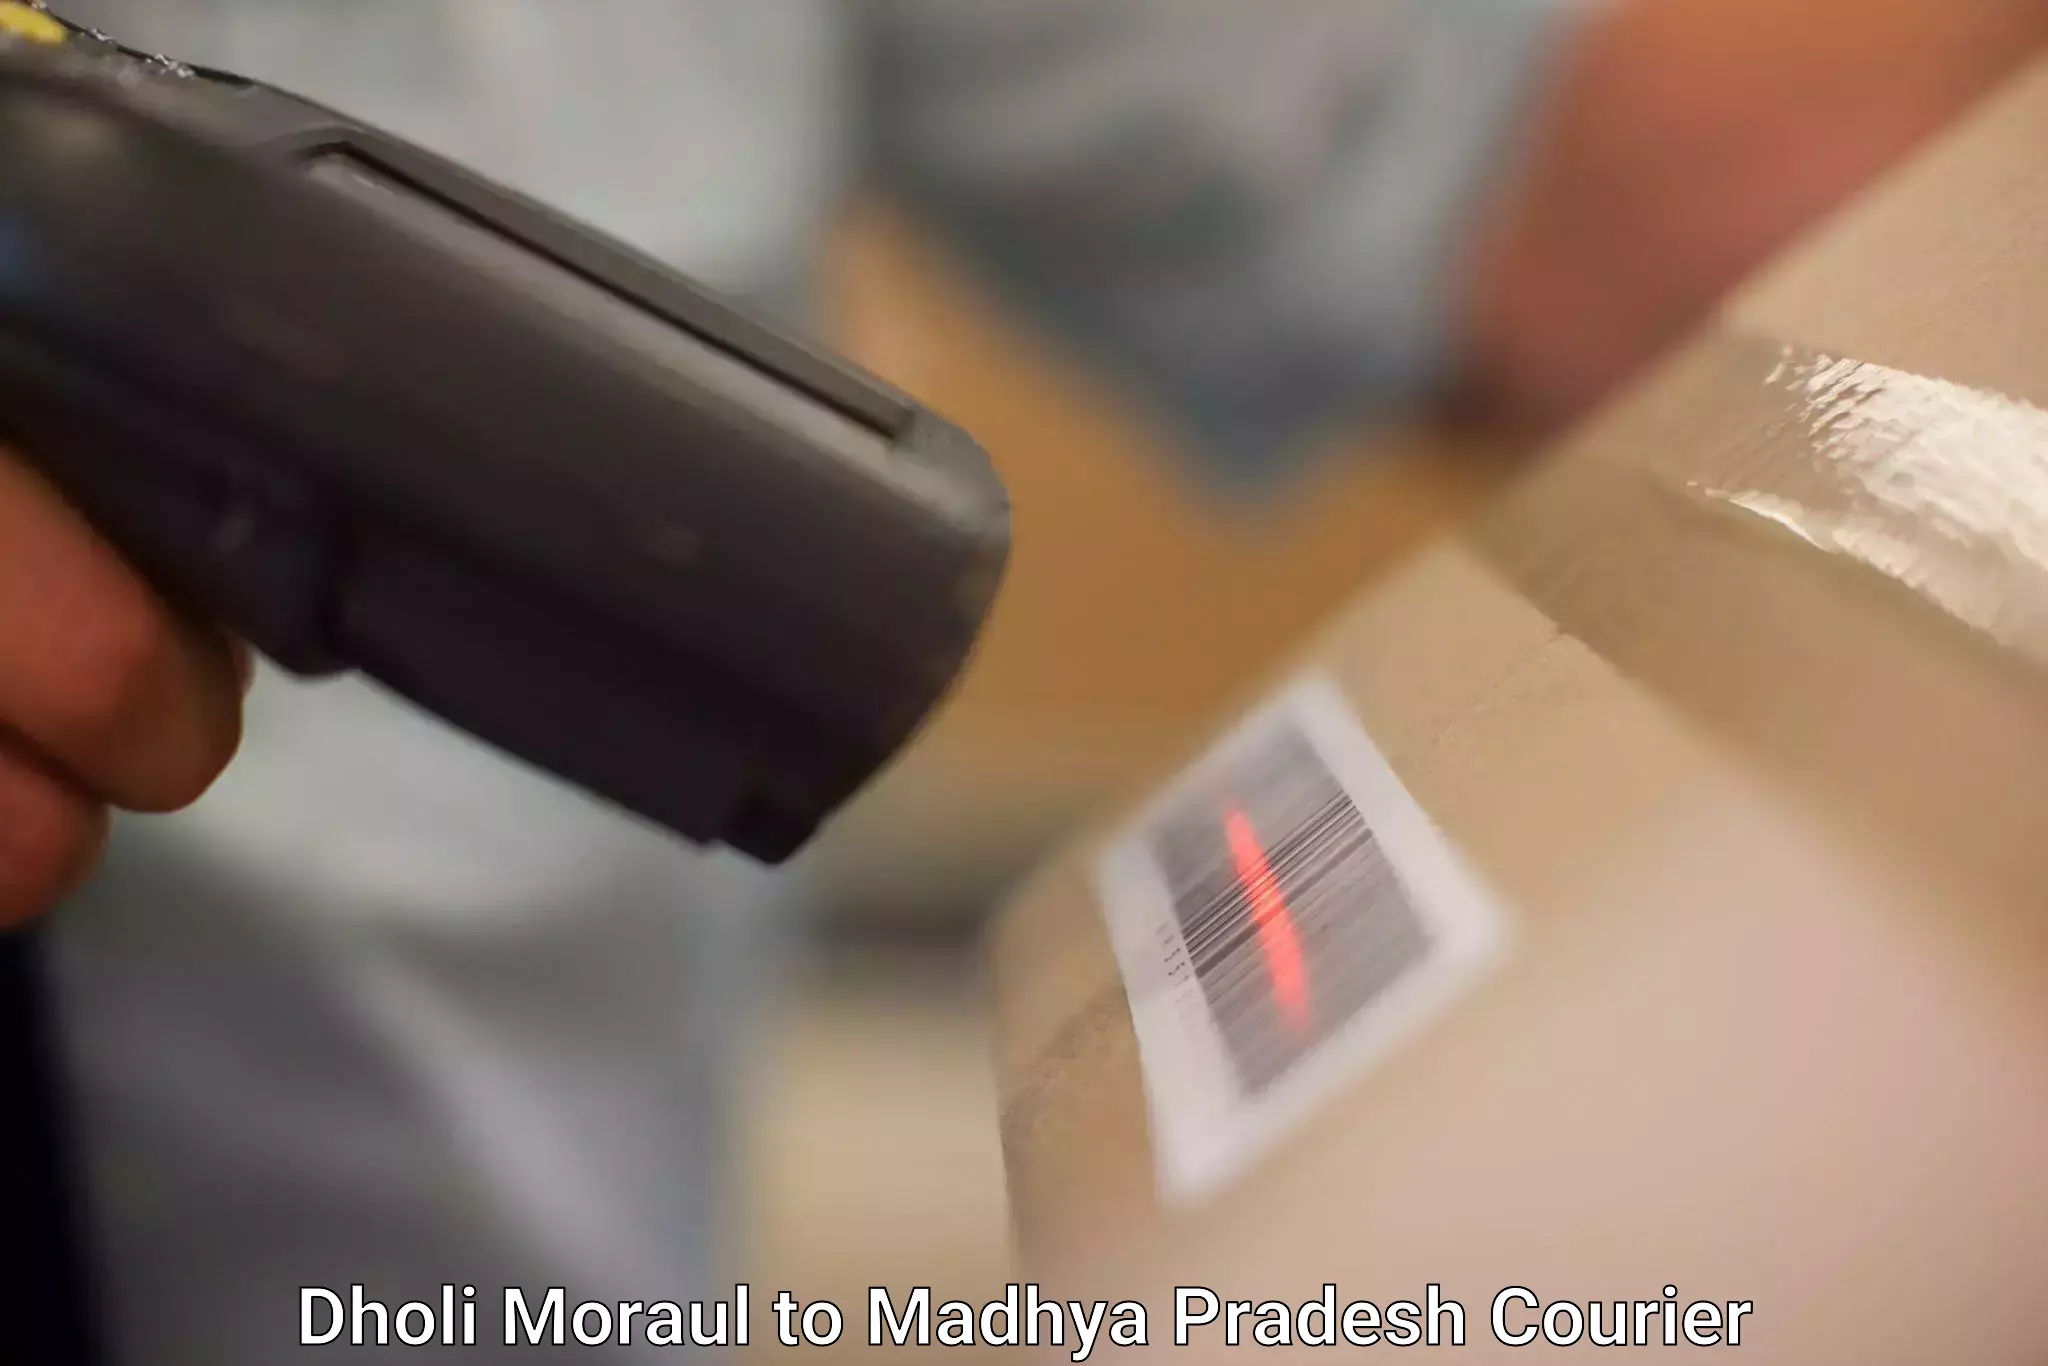 Global shipping networks Dholi Moraul to Chand Chaurai